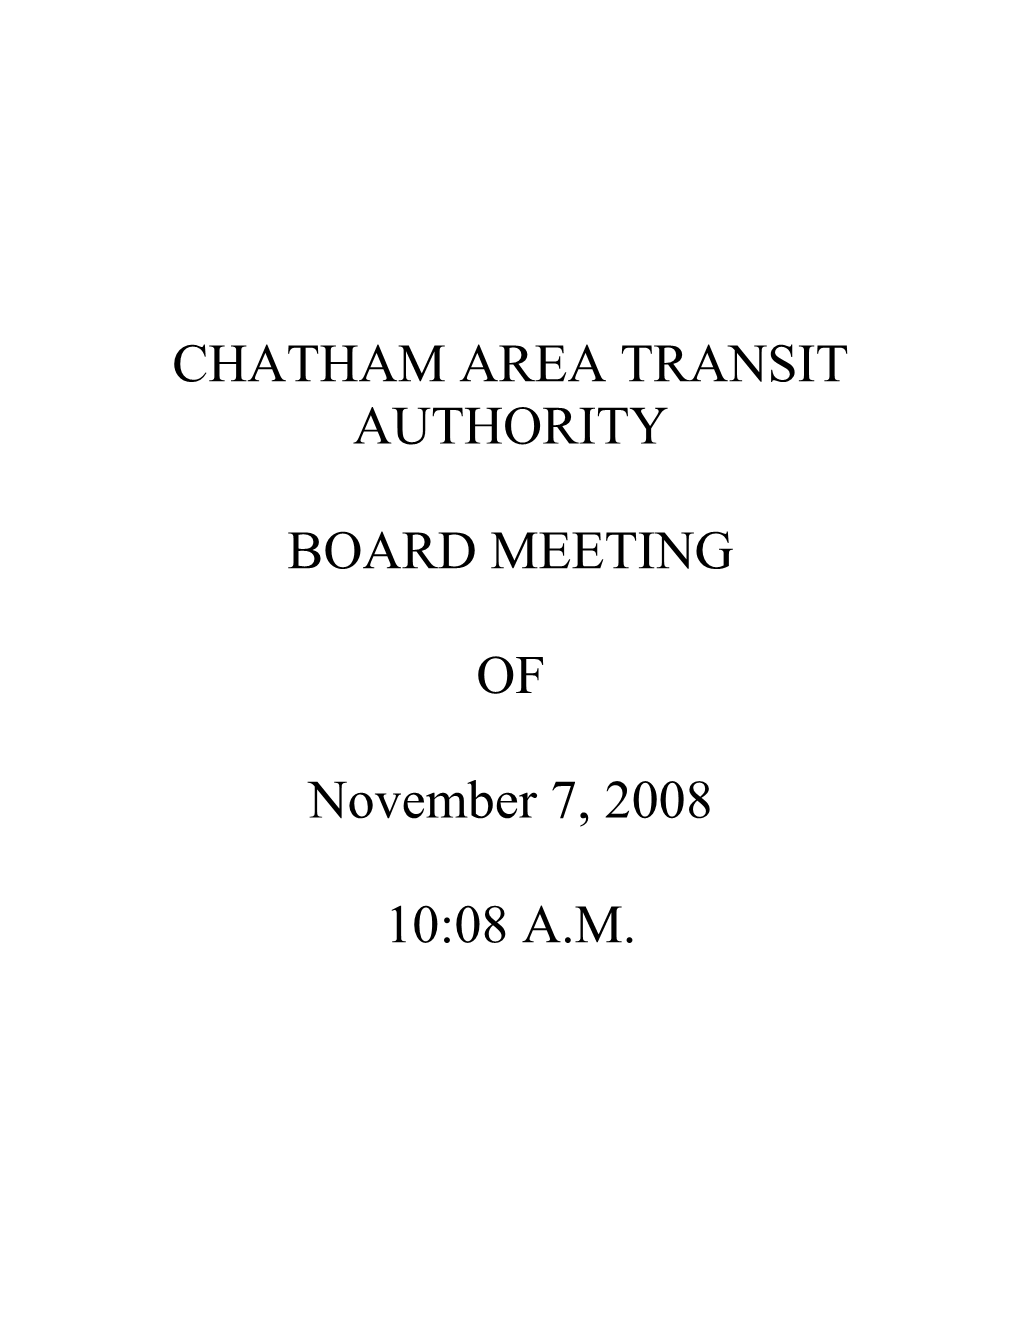 Chatham Area Transit Authority s1